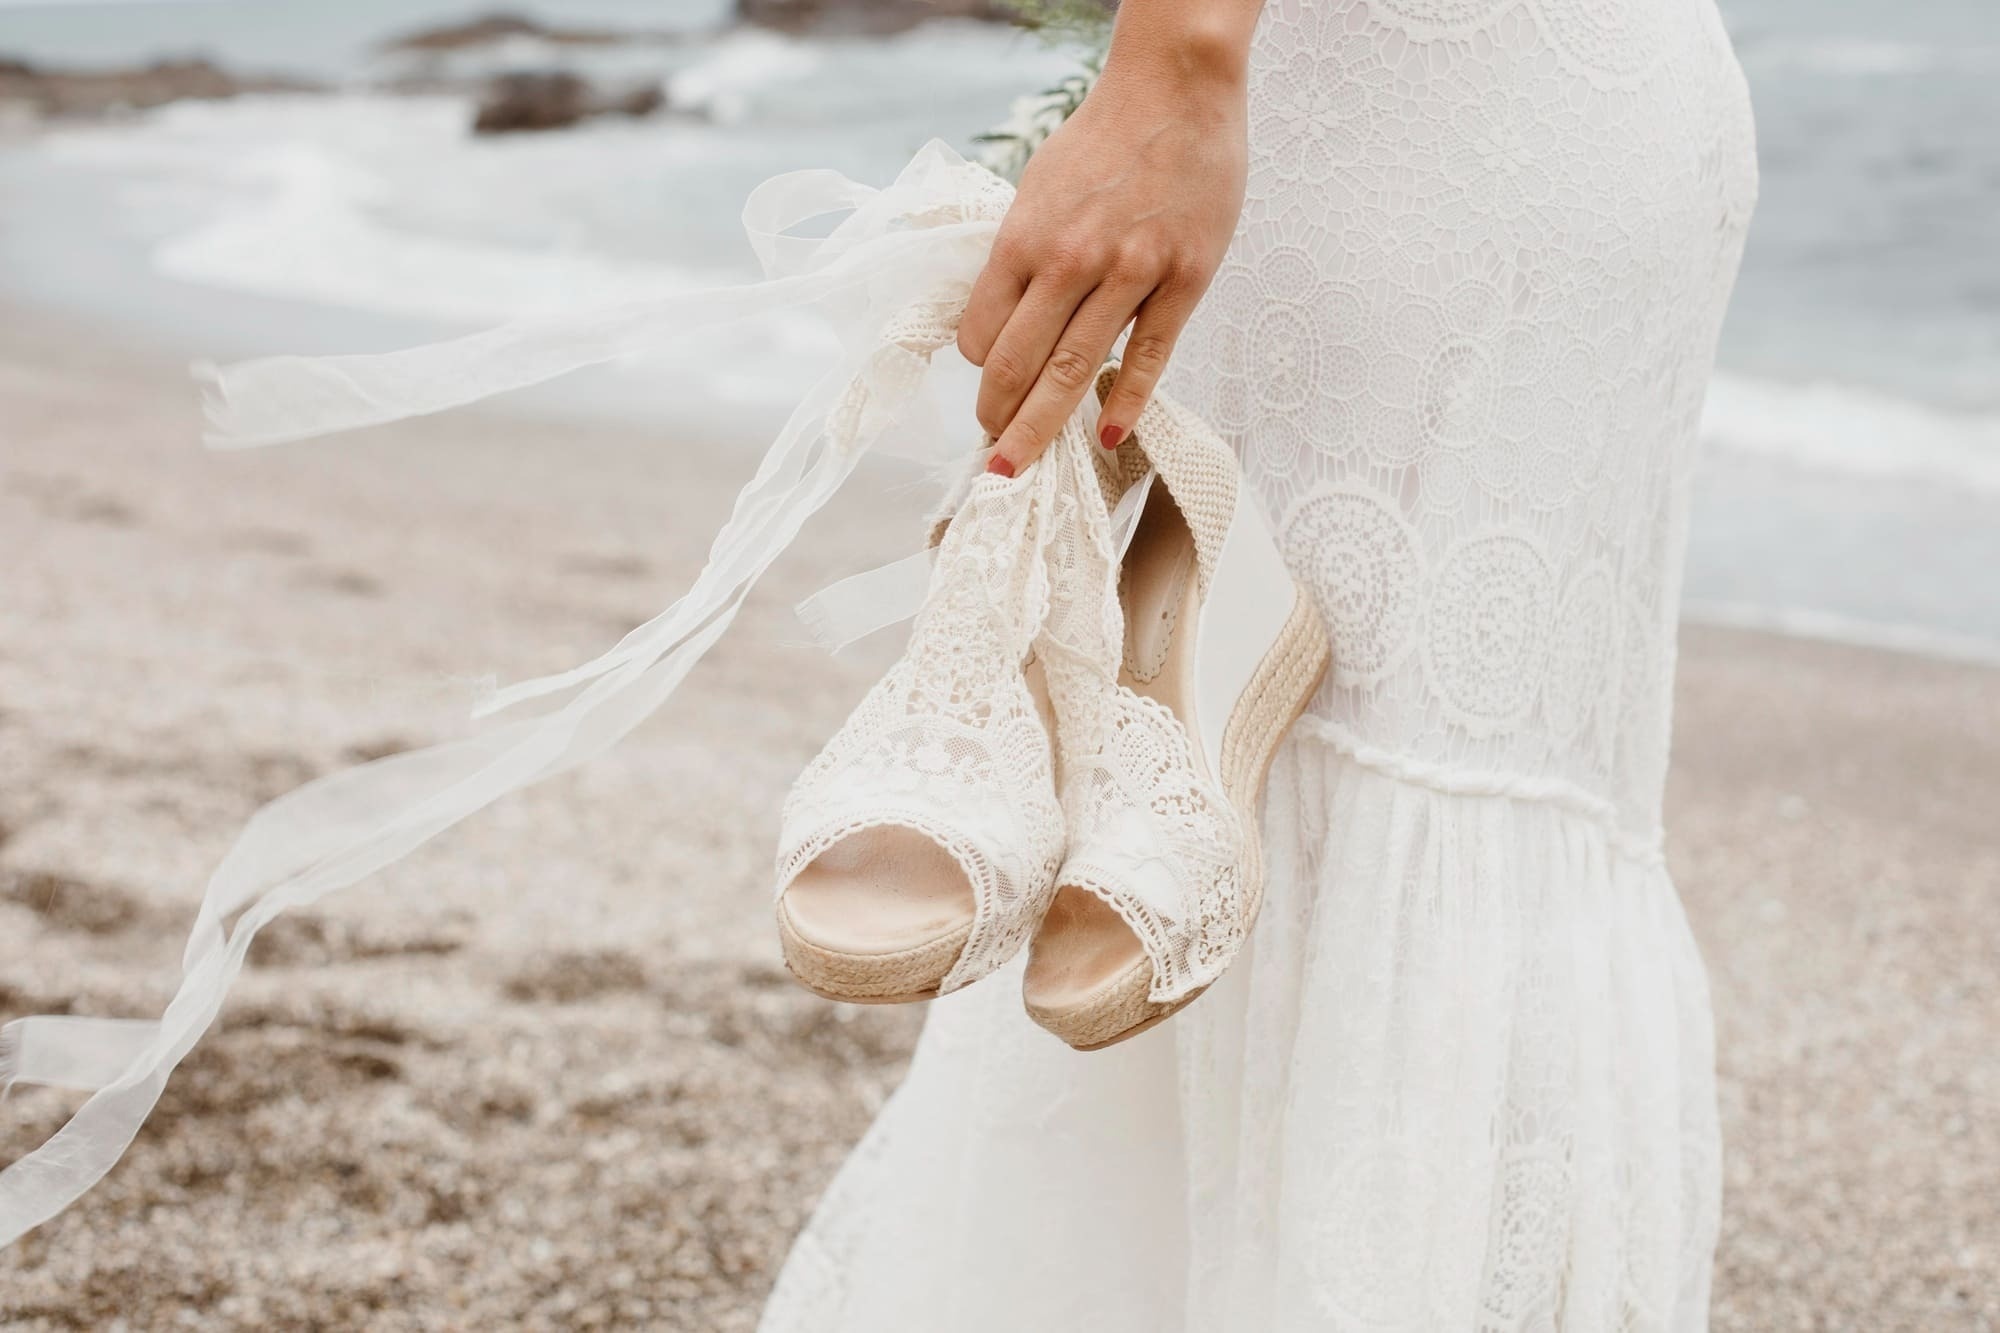 Una boda diferente lleva sandalias para celebrar tu boda